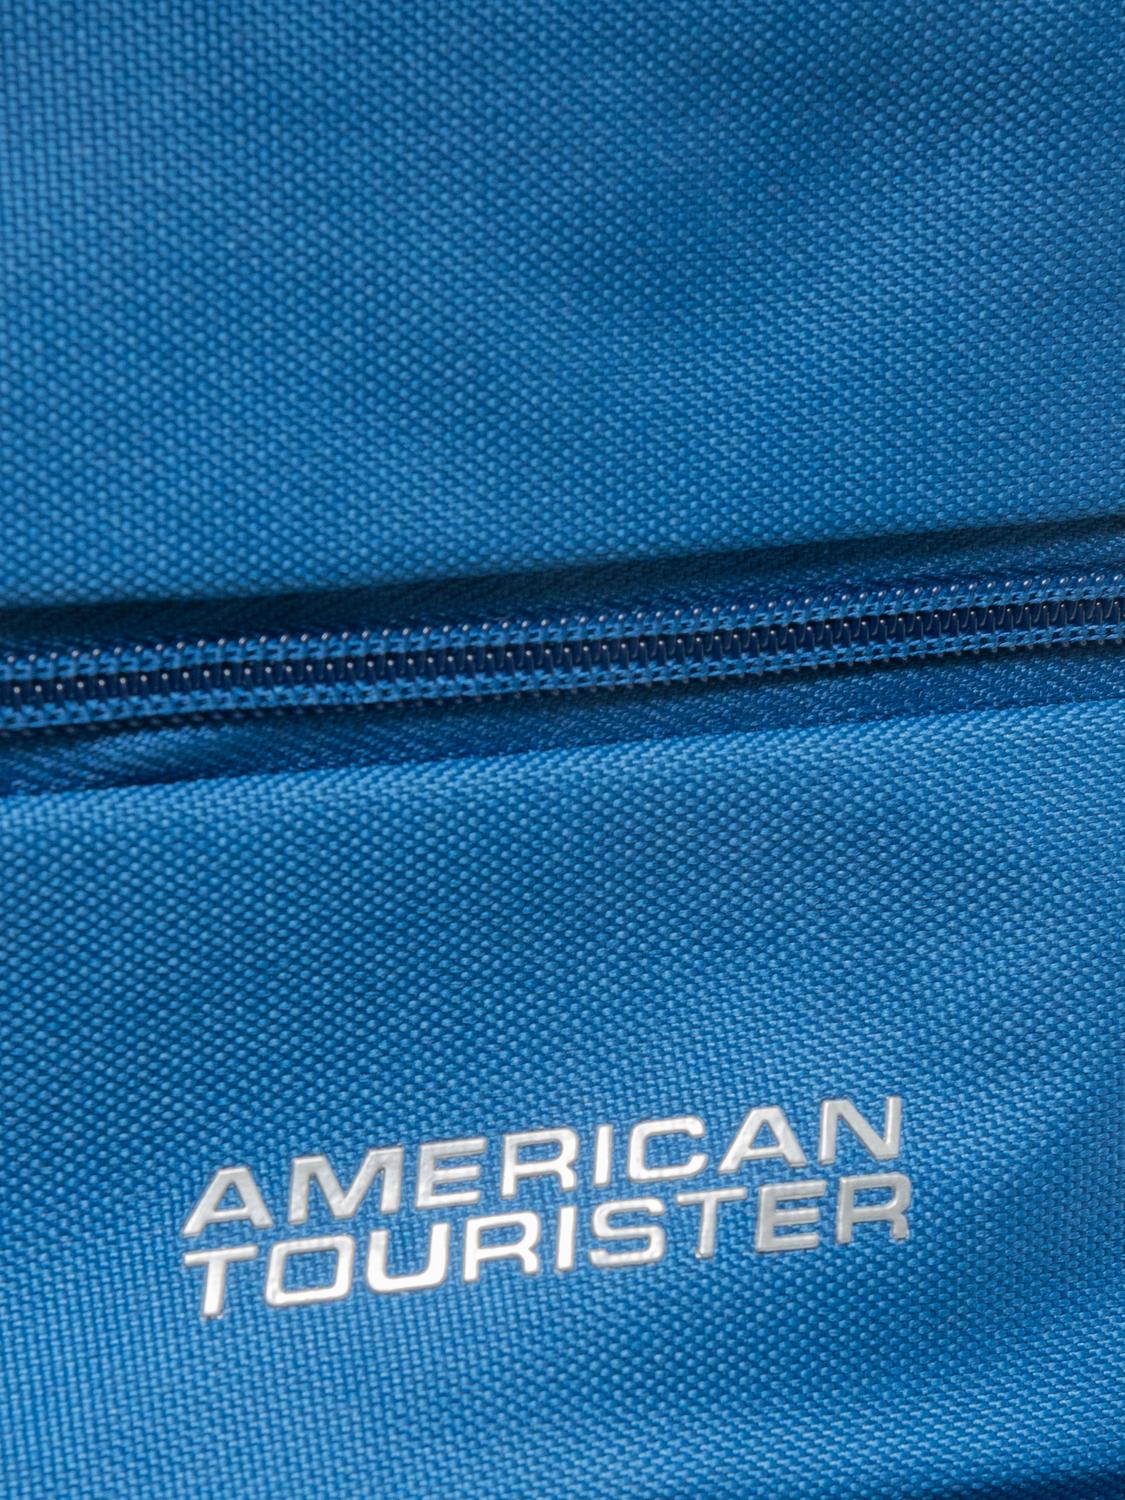 American Tourister Summer Session Mochila Para Portátil De 15,6